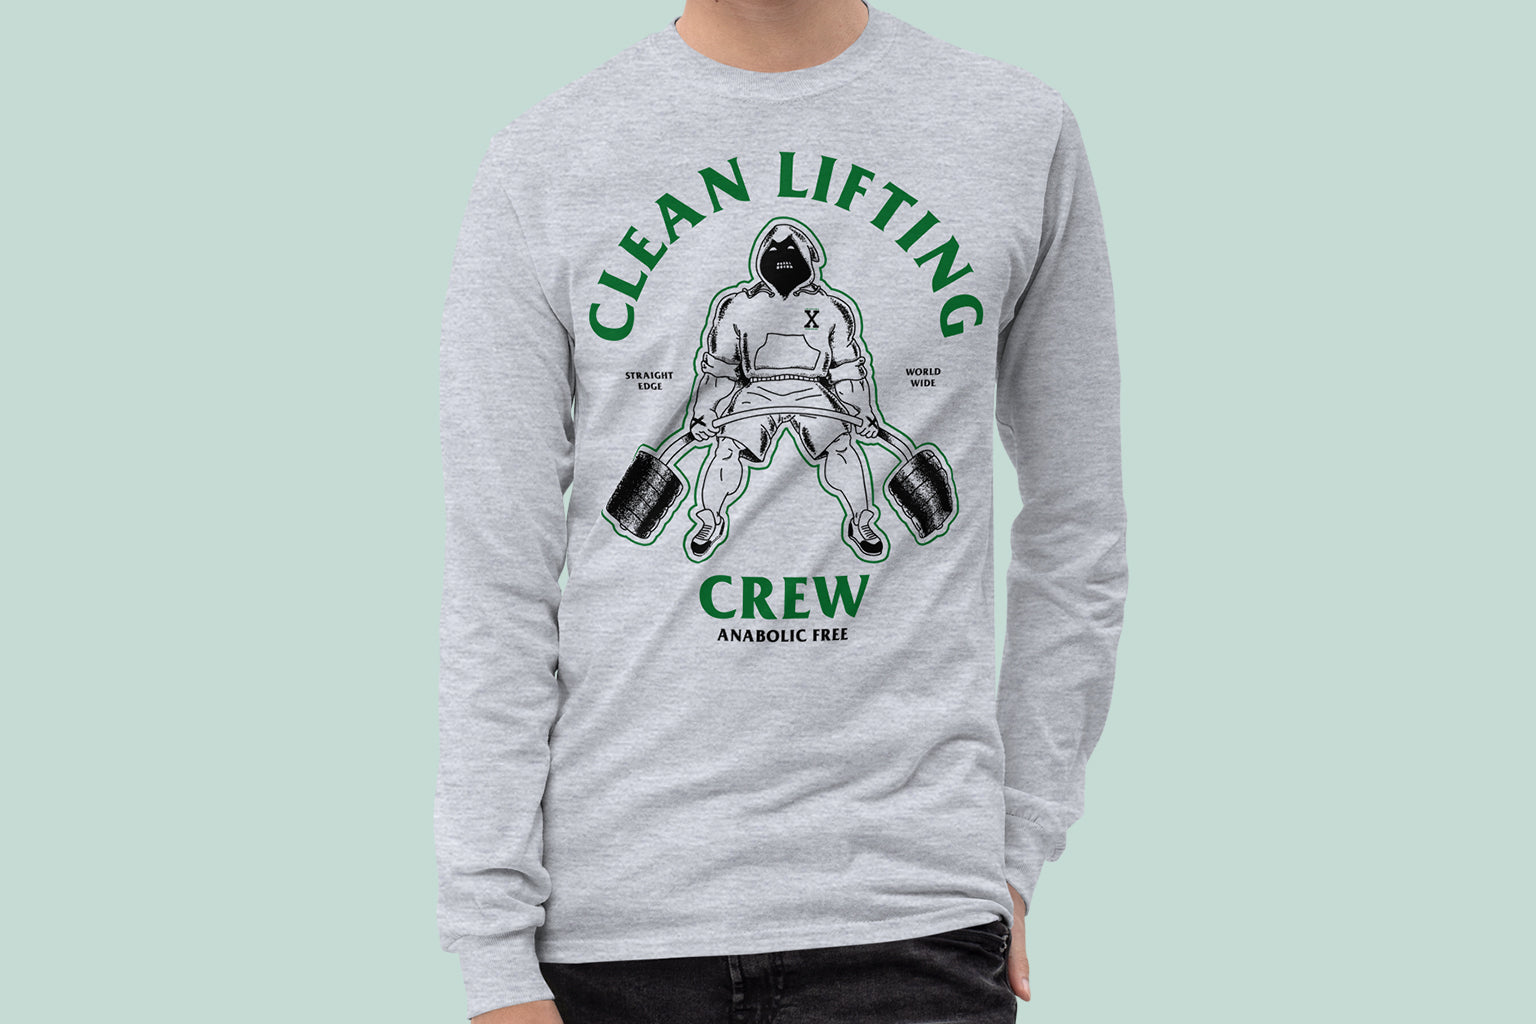 Clean Lifting Crew Long Sleeve Tee in Gray